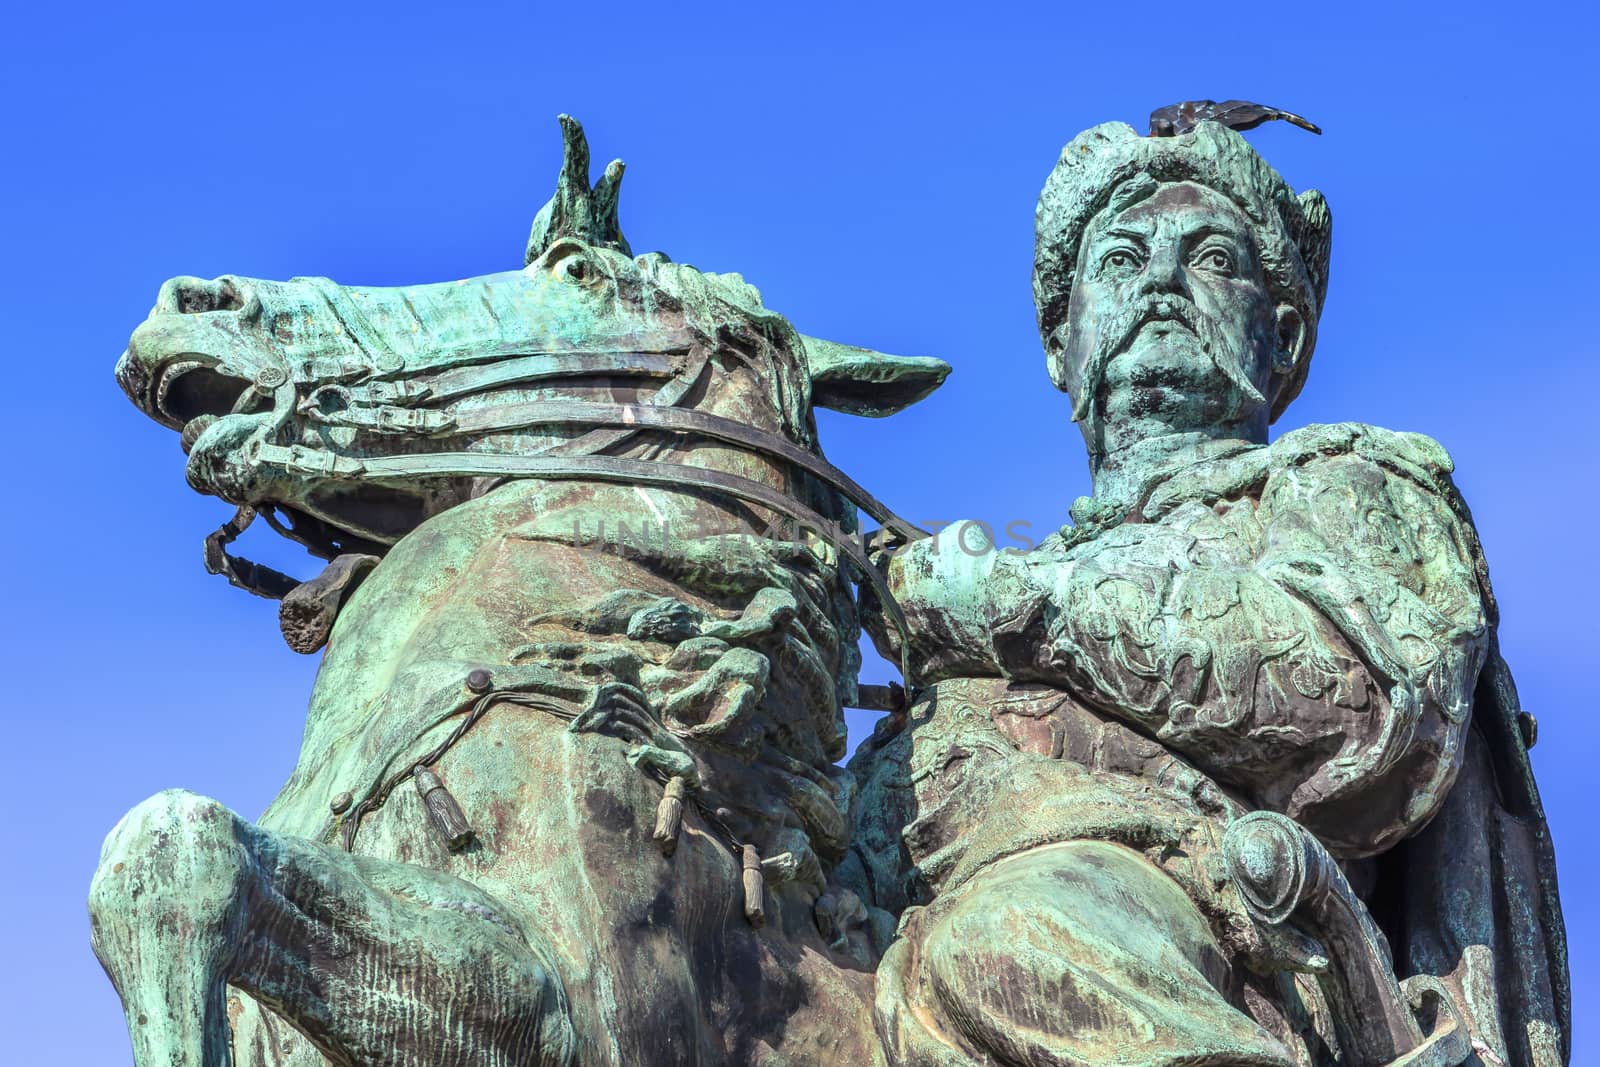 Bogdan Khmelnitsky Equestrian Statue Sofiyskaya Square Kiev Ukraine. Founder of Ukraine Cossack State in 1654. Statue created 1881 by Sculptor Mikhail Mykeshin